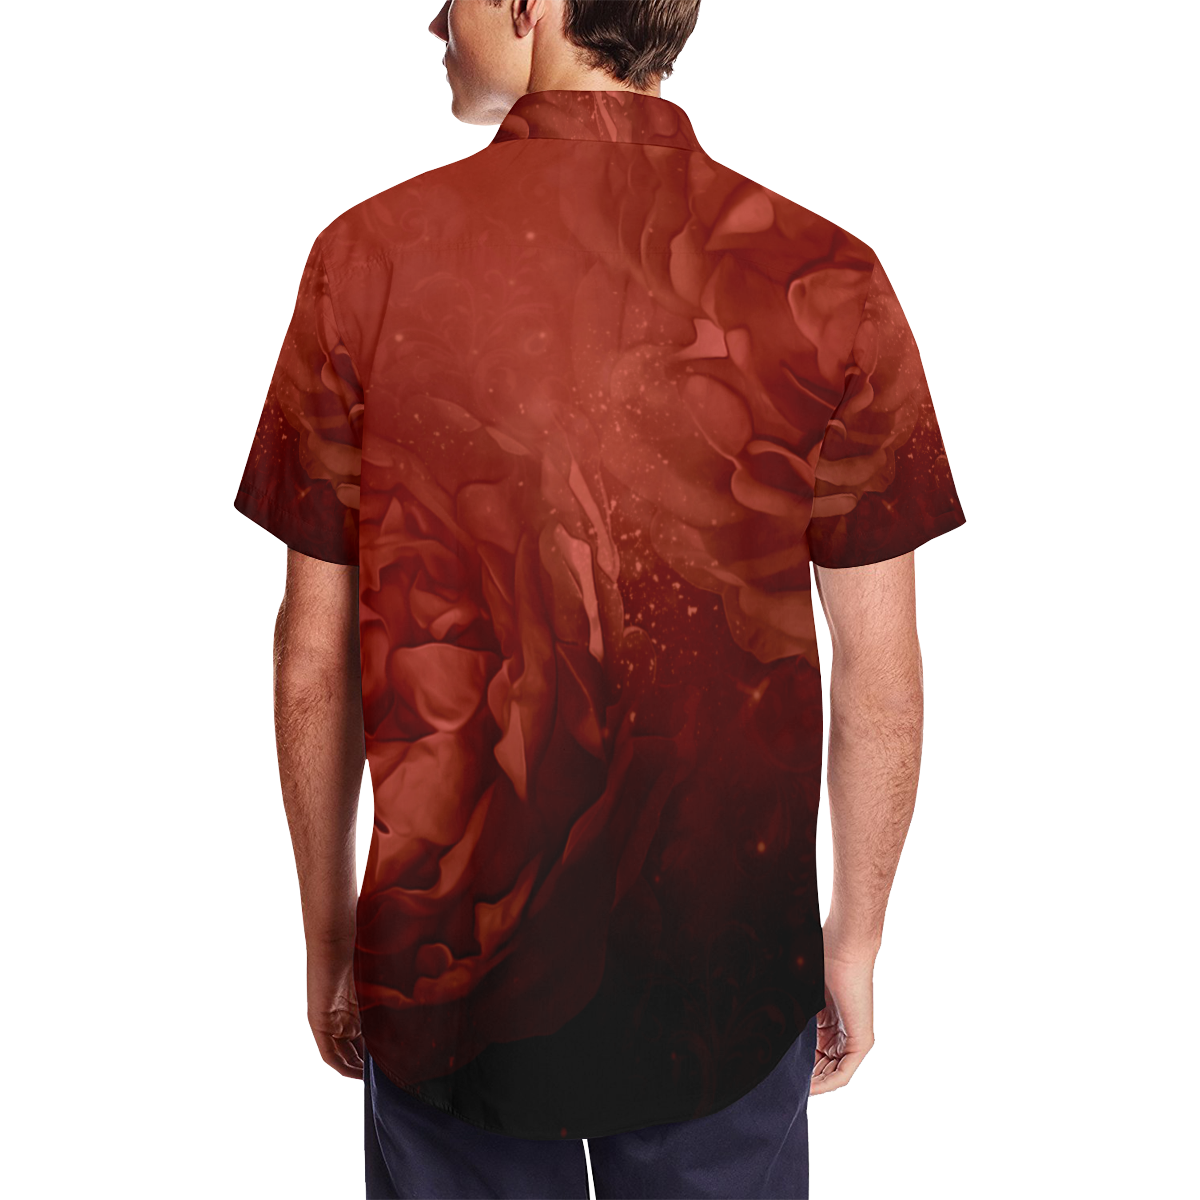 Wonderful red flowers Men's Short Sleeve Shirt with Lapel Collar (Model T54)